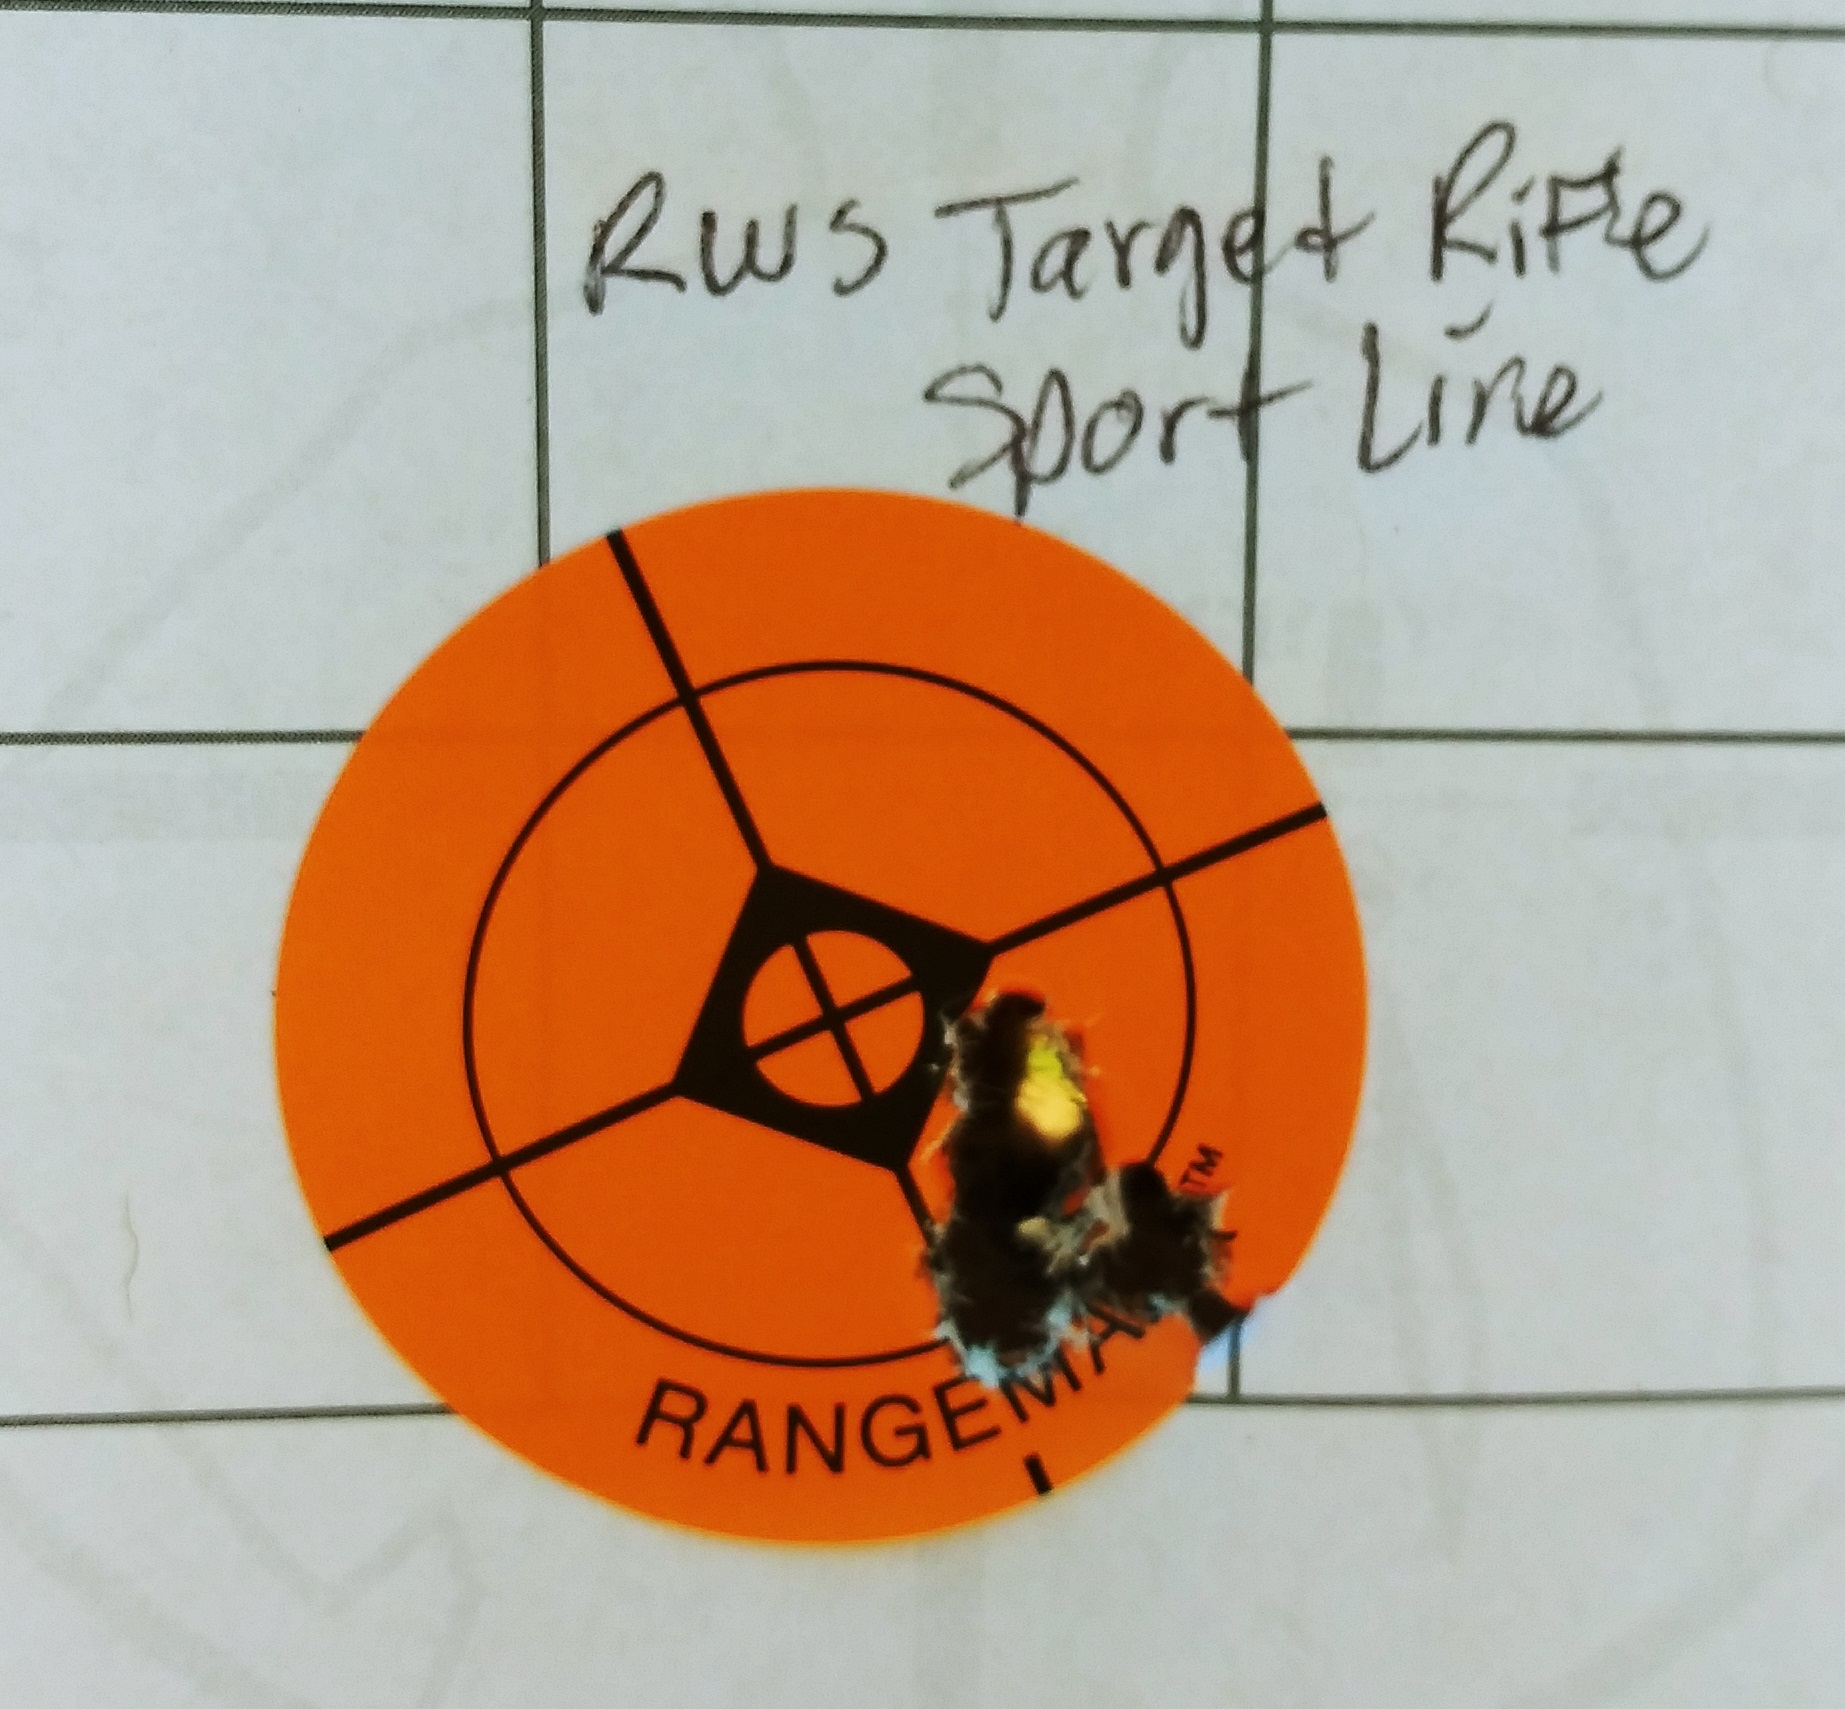 RWS Target Rifle Sport Line 40gn.jpg